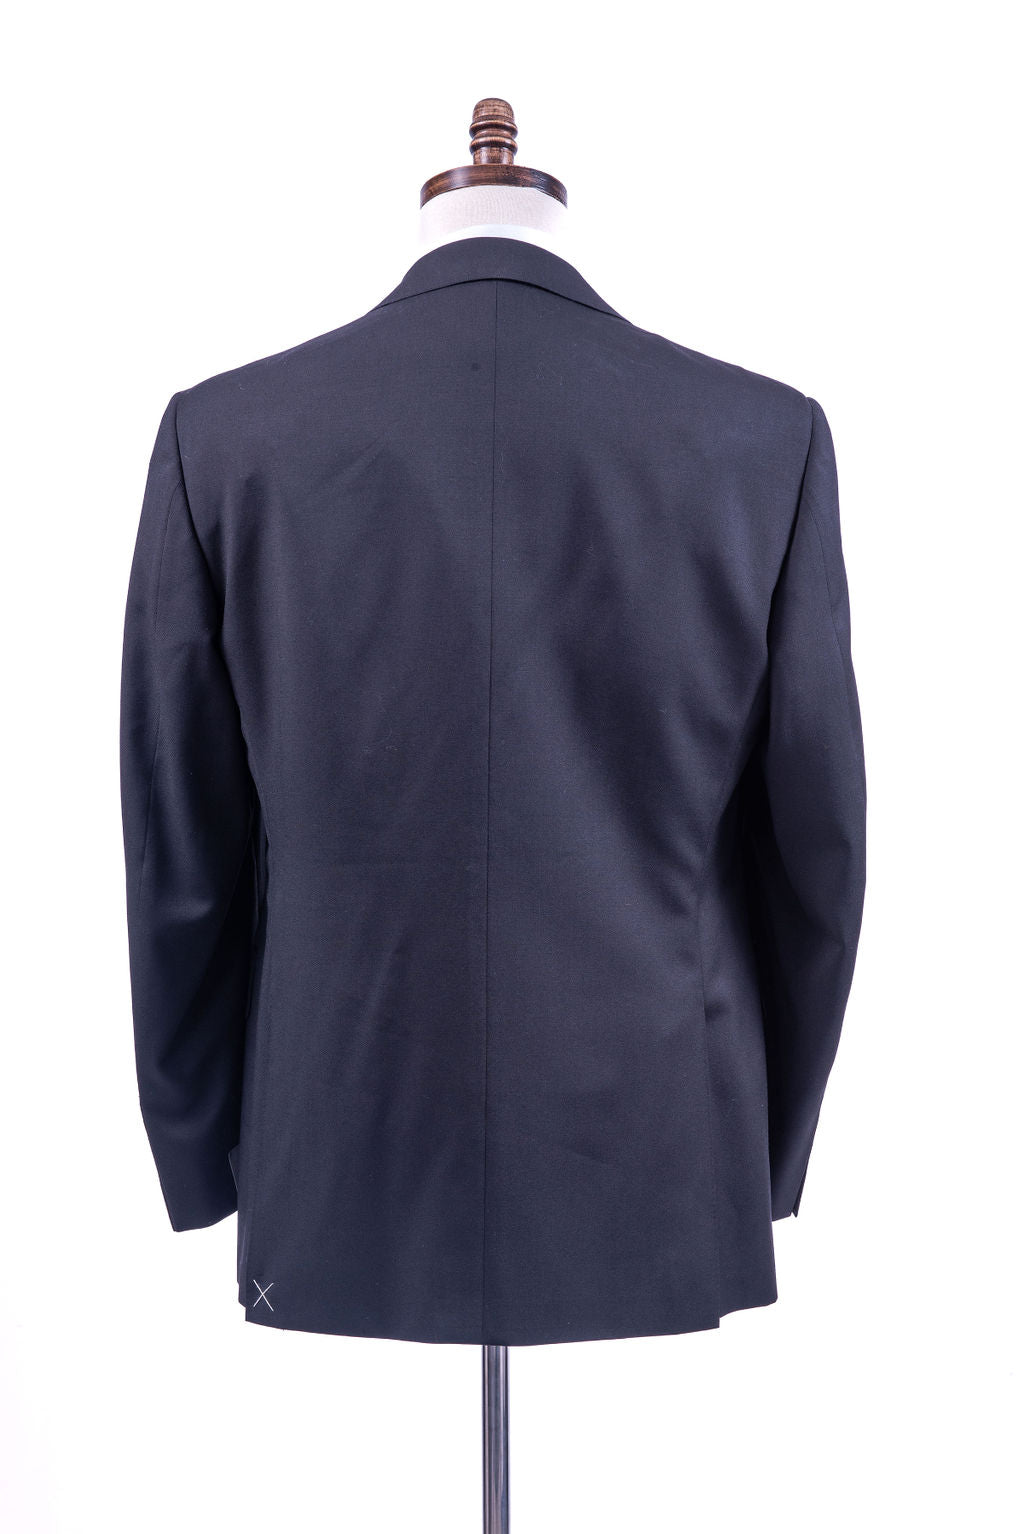 Canali 1934 Mens Solid Black 40R Drop 7 100% Wool 2 Button 2 Piece Suit